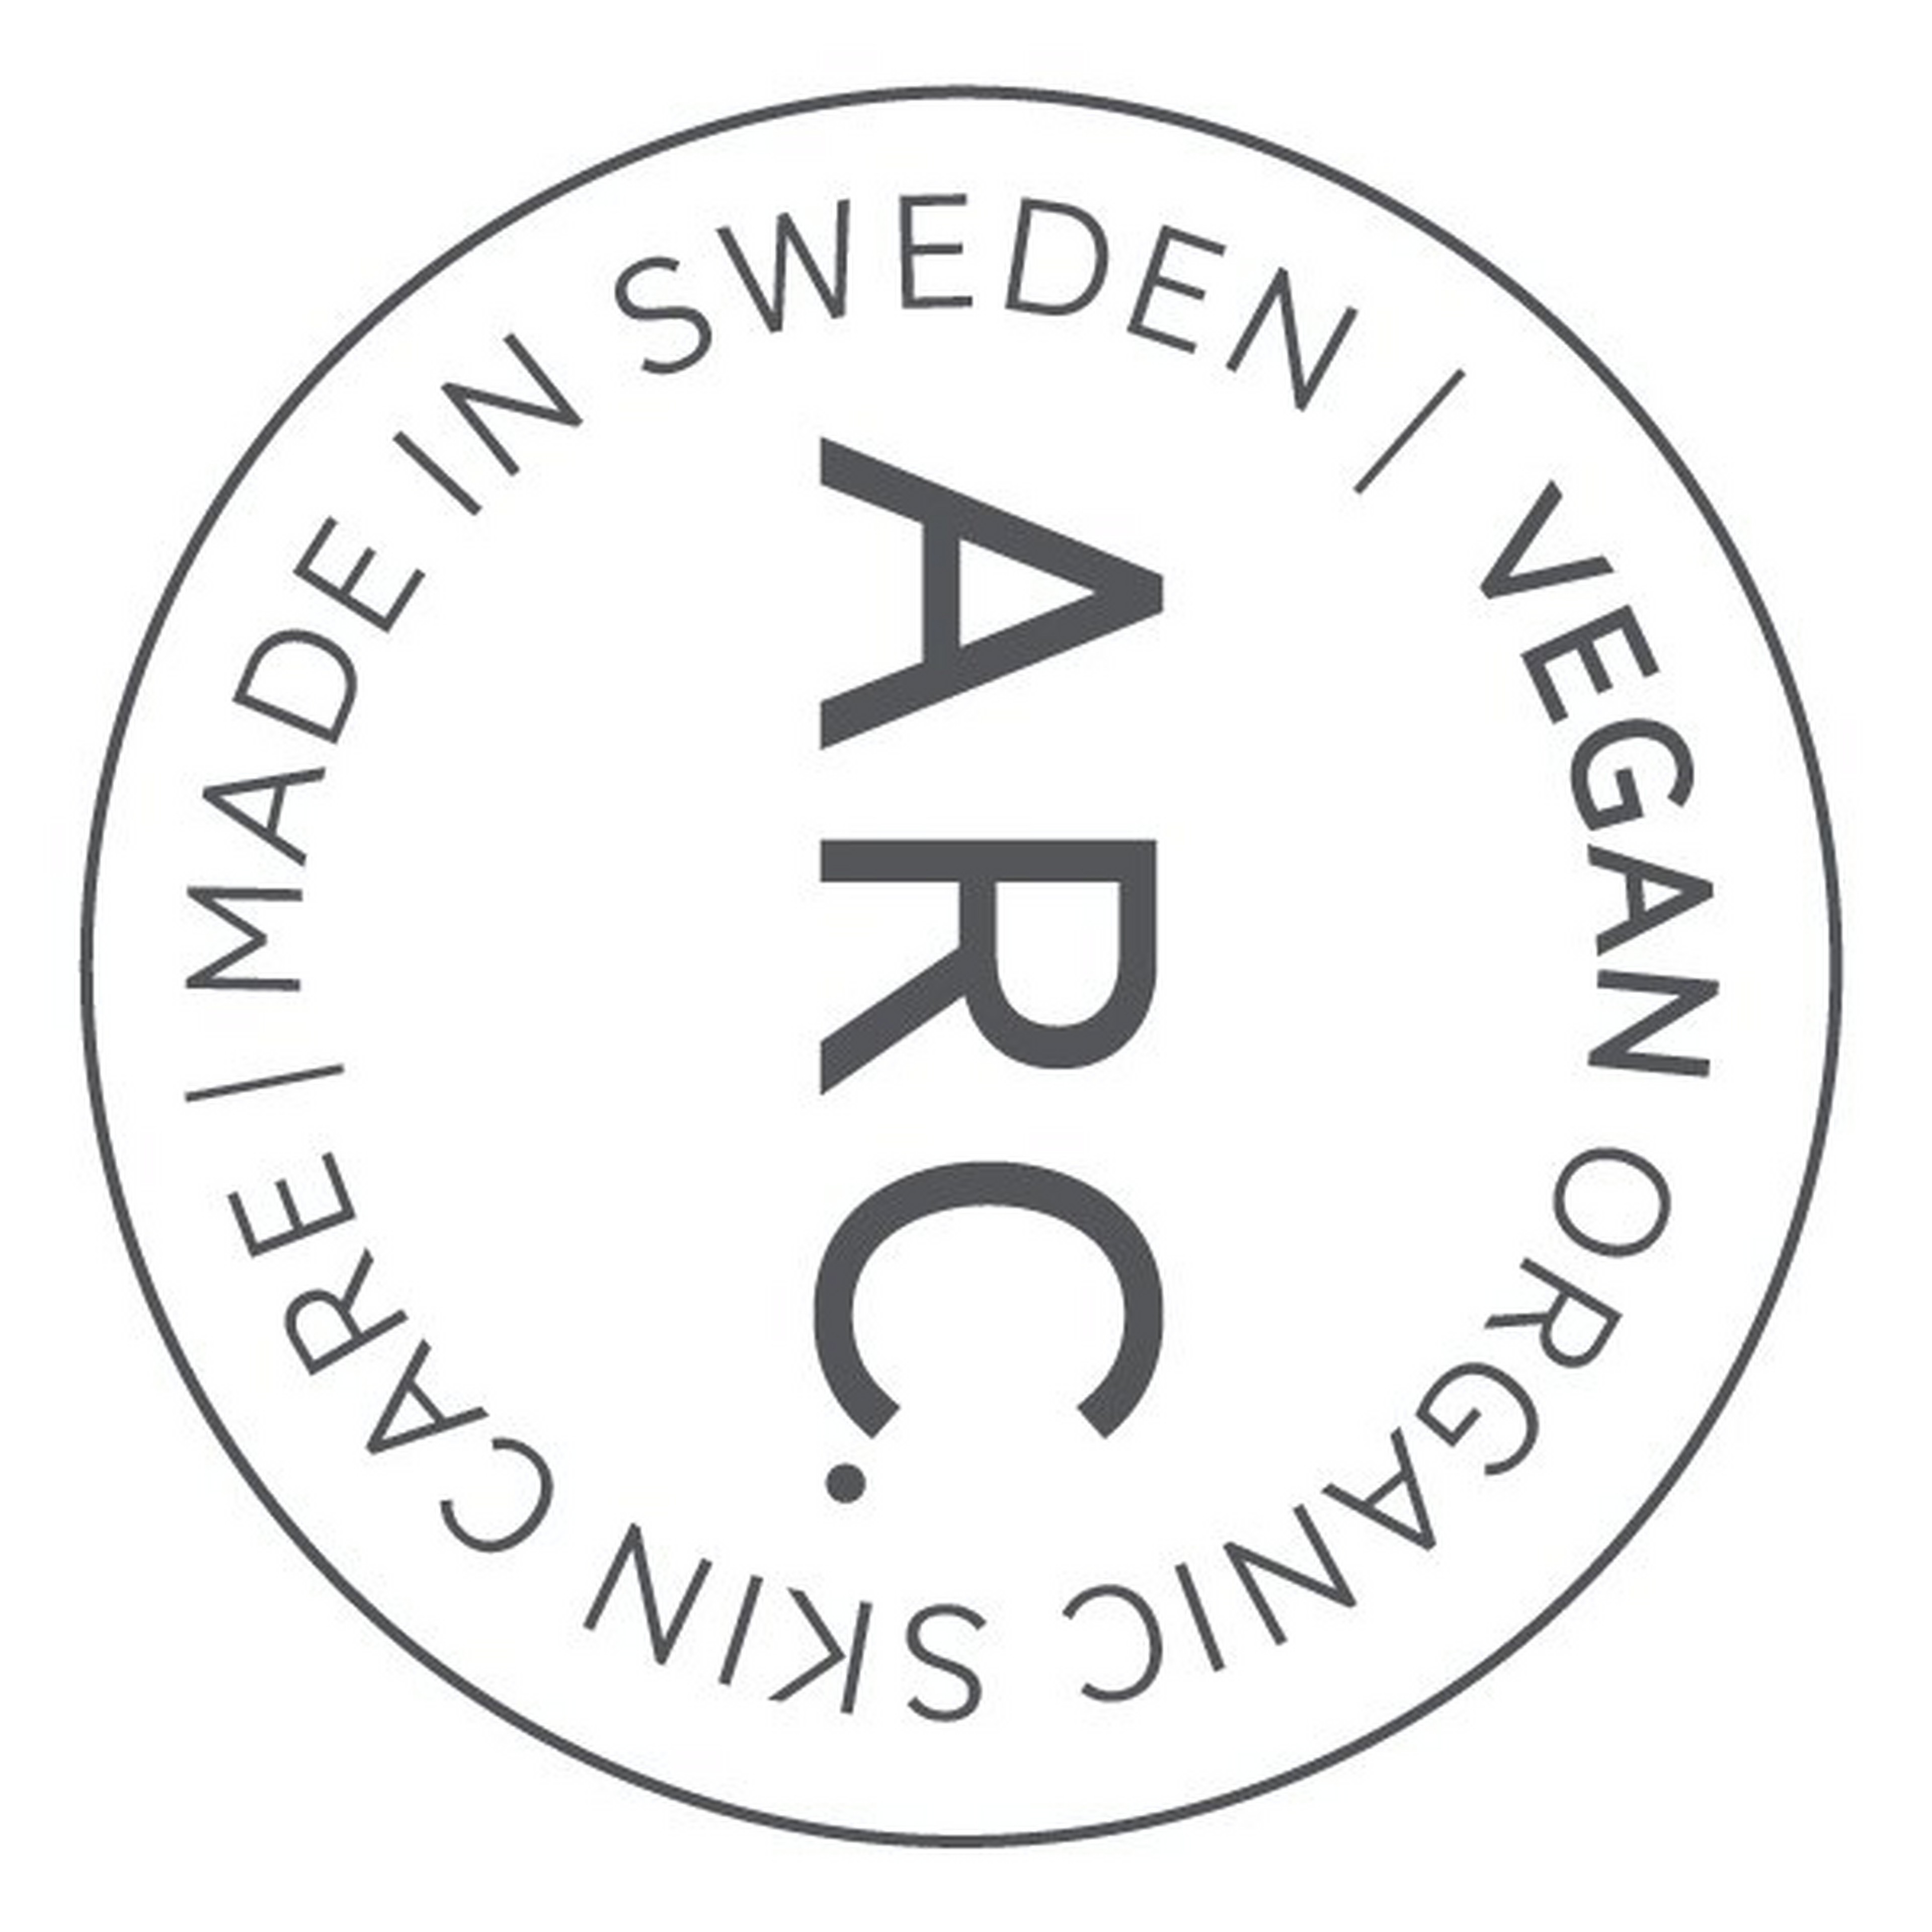 ARC Of SWEDEN logotype